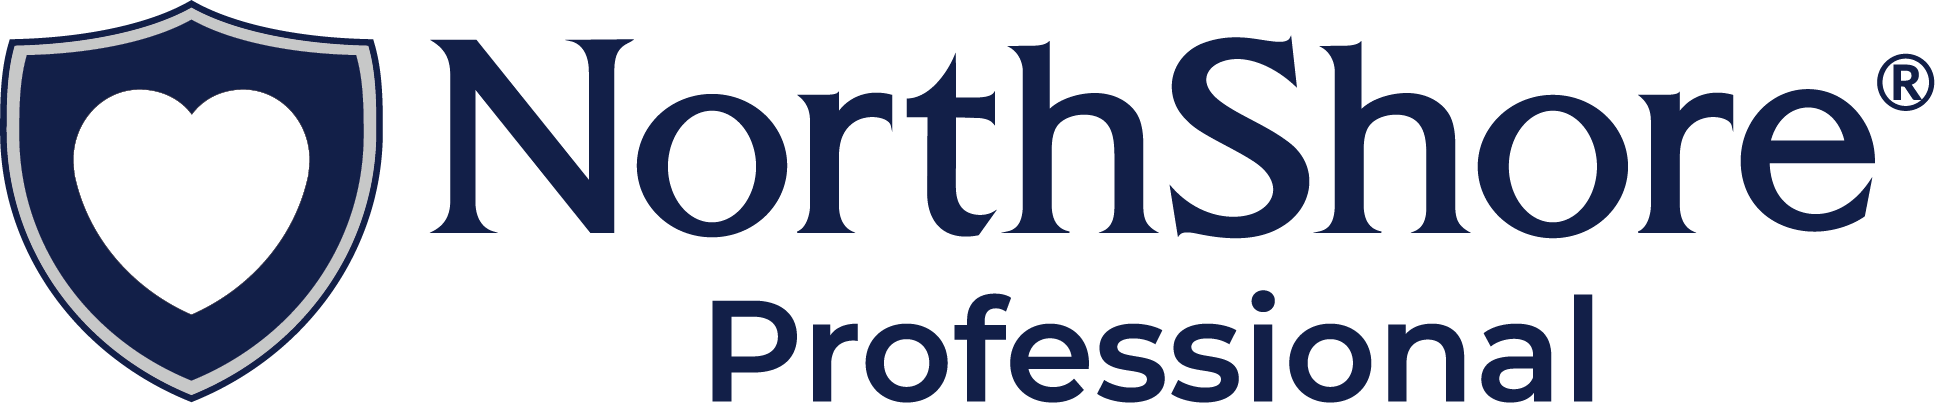 Northshore Professional Logo